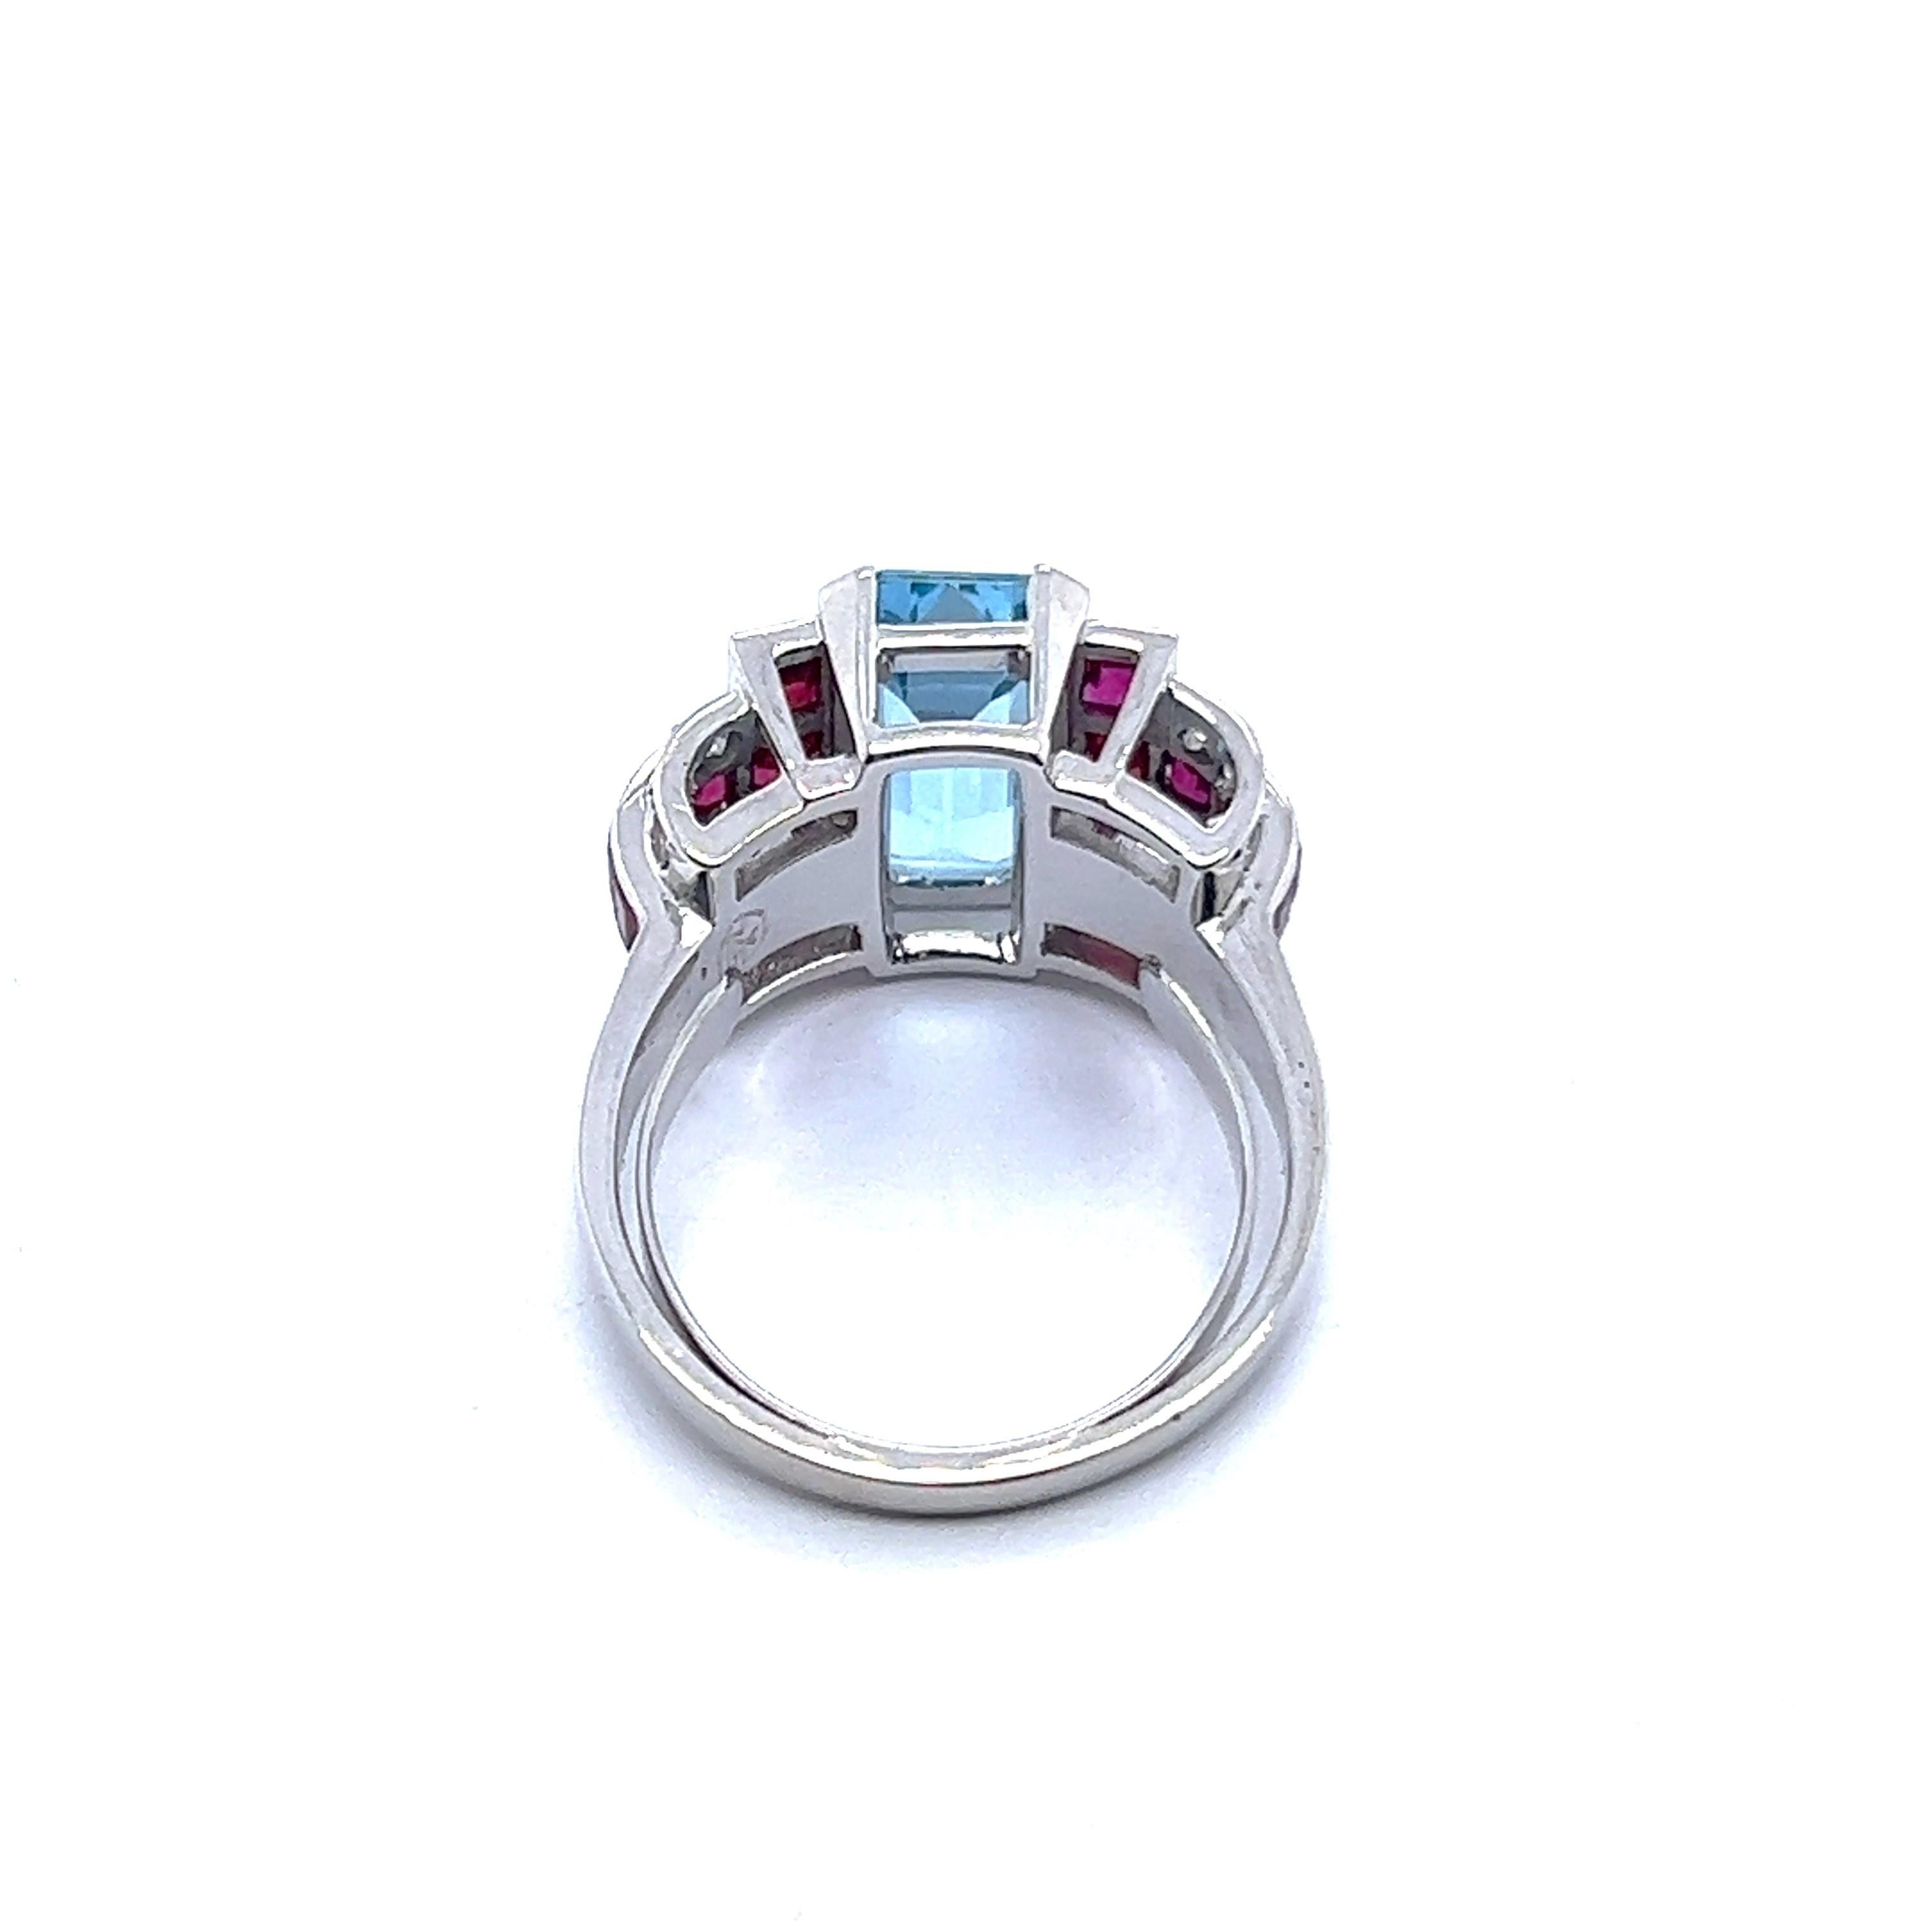 Ring with Aquamarine, Rubies & Diamonds in 18 Karat White Gold by Gübelin 1